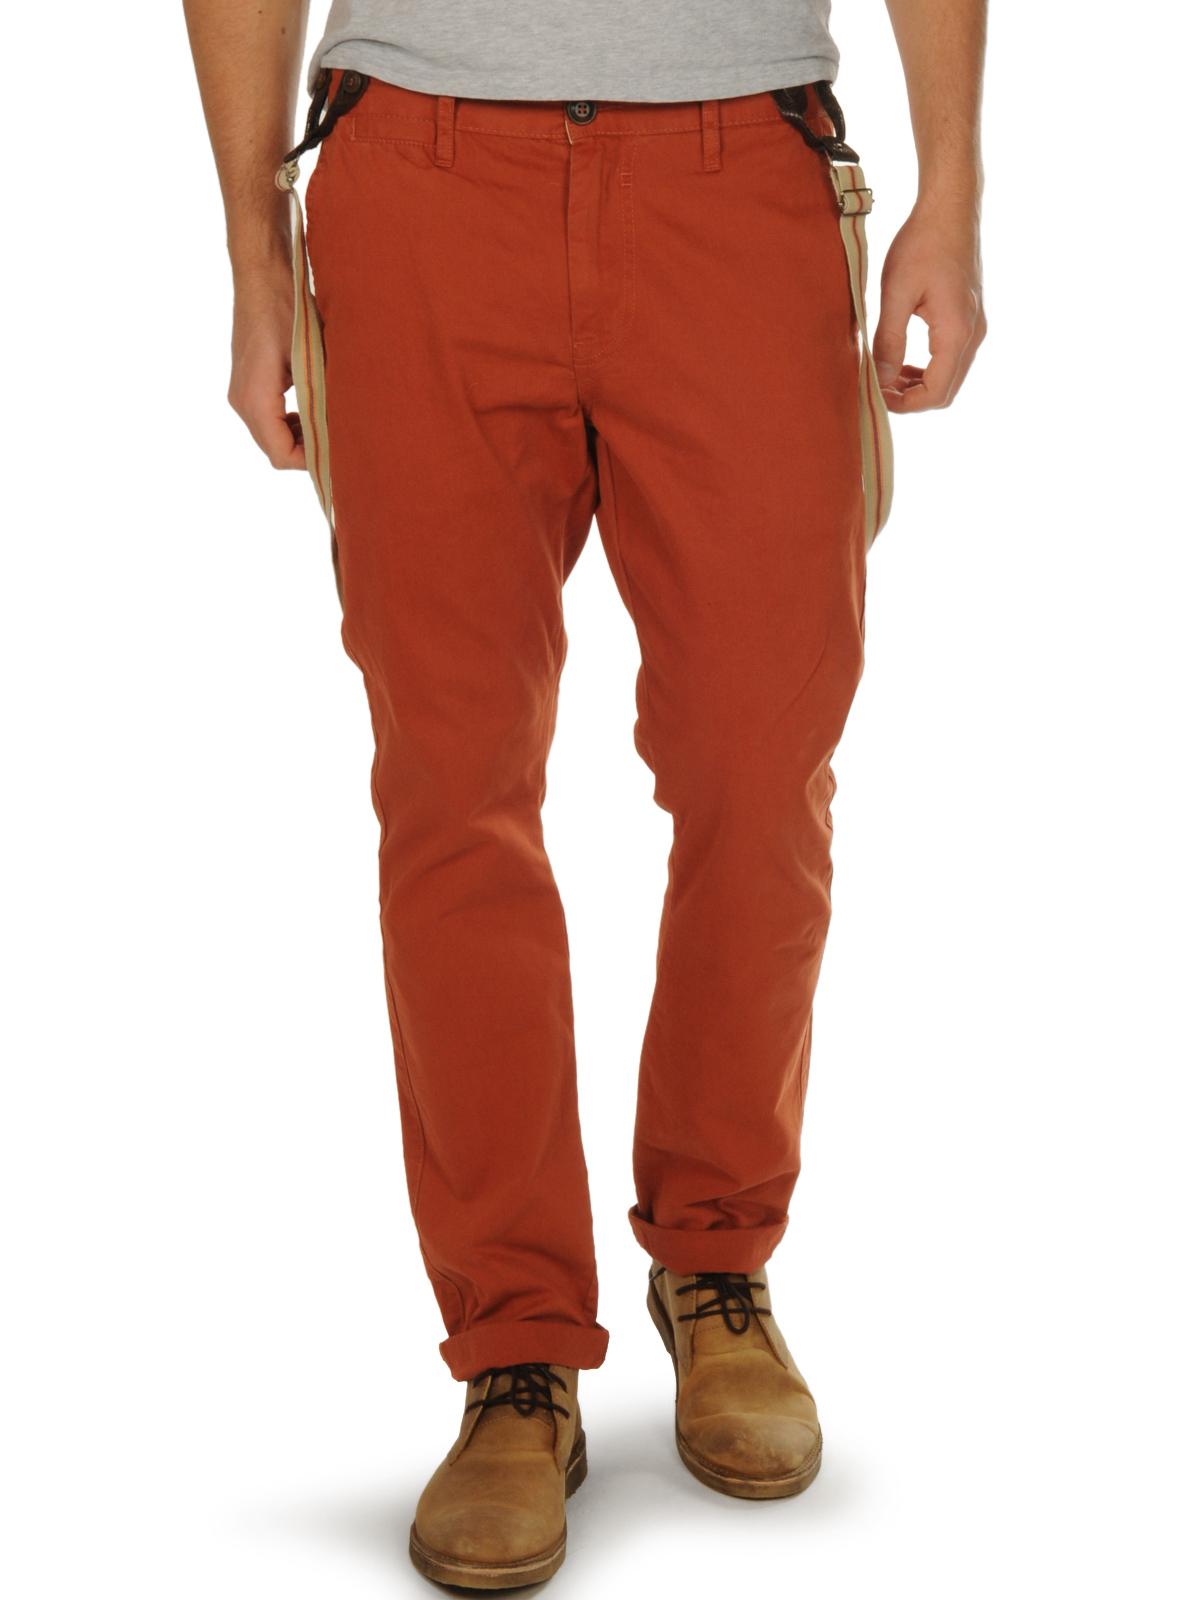 Foto Solid Jeans Mel Pants pantalón con tirantes fox marrón/beige 29-32 foto 339698